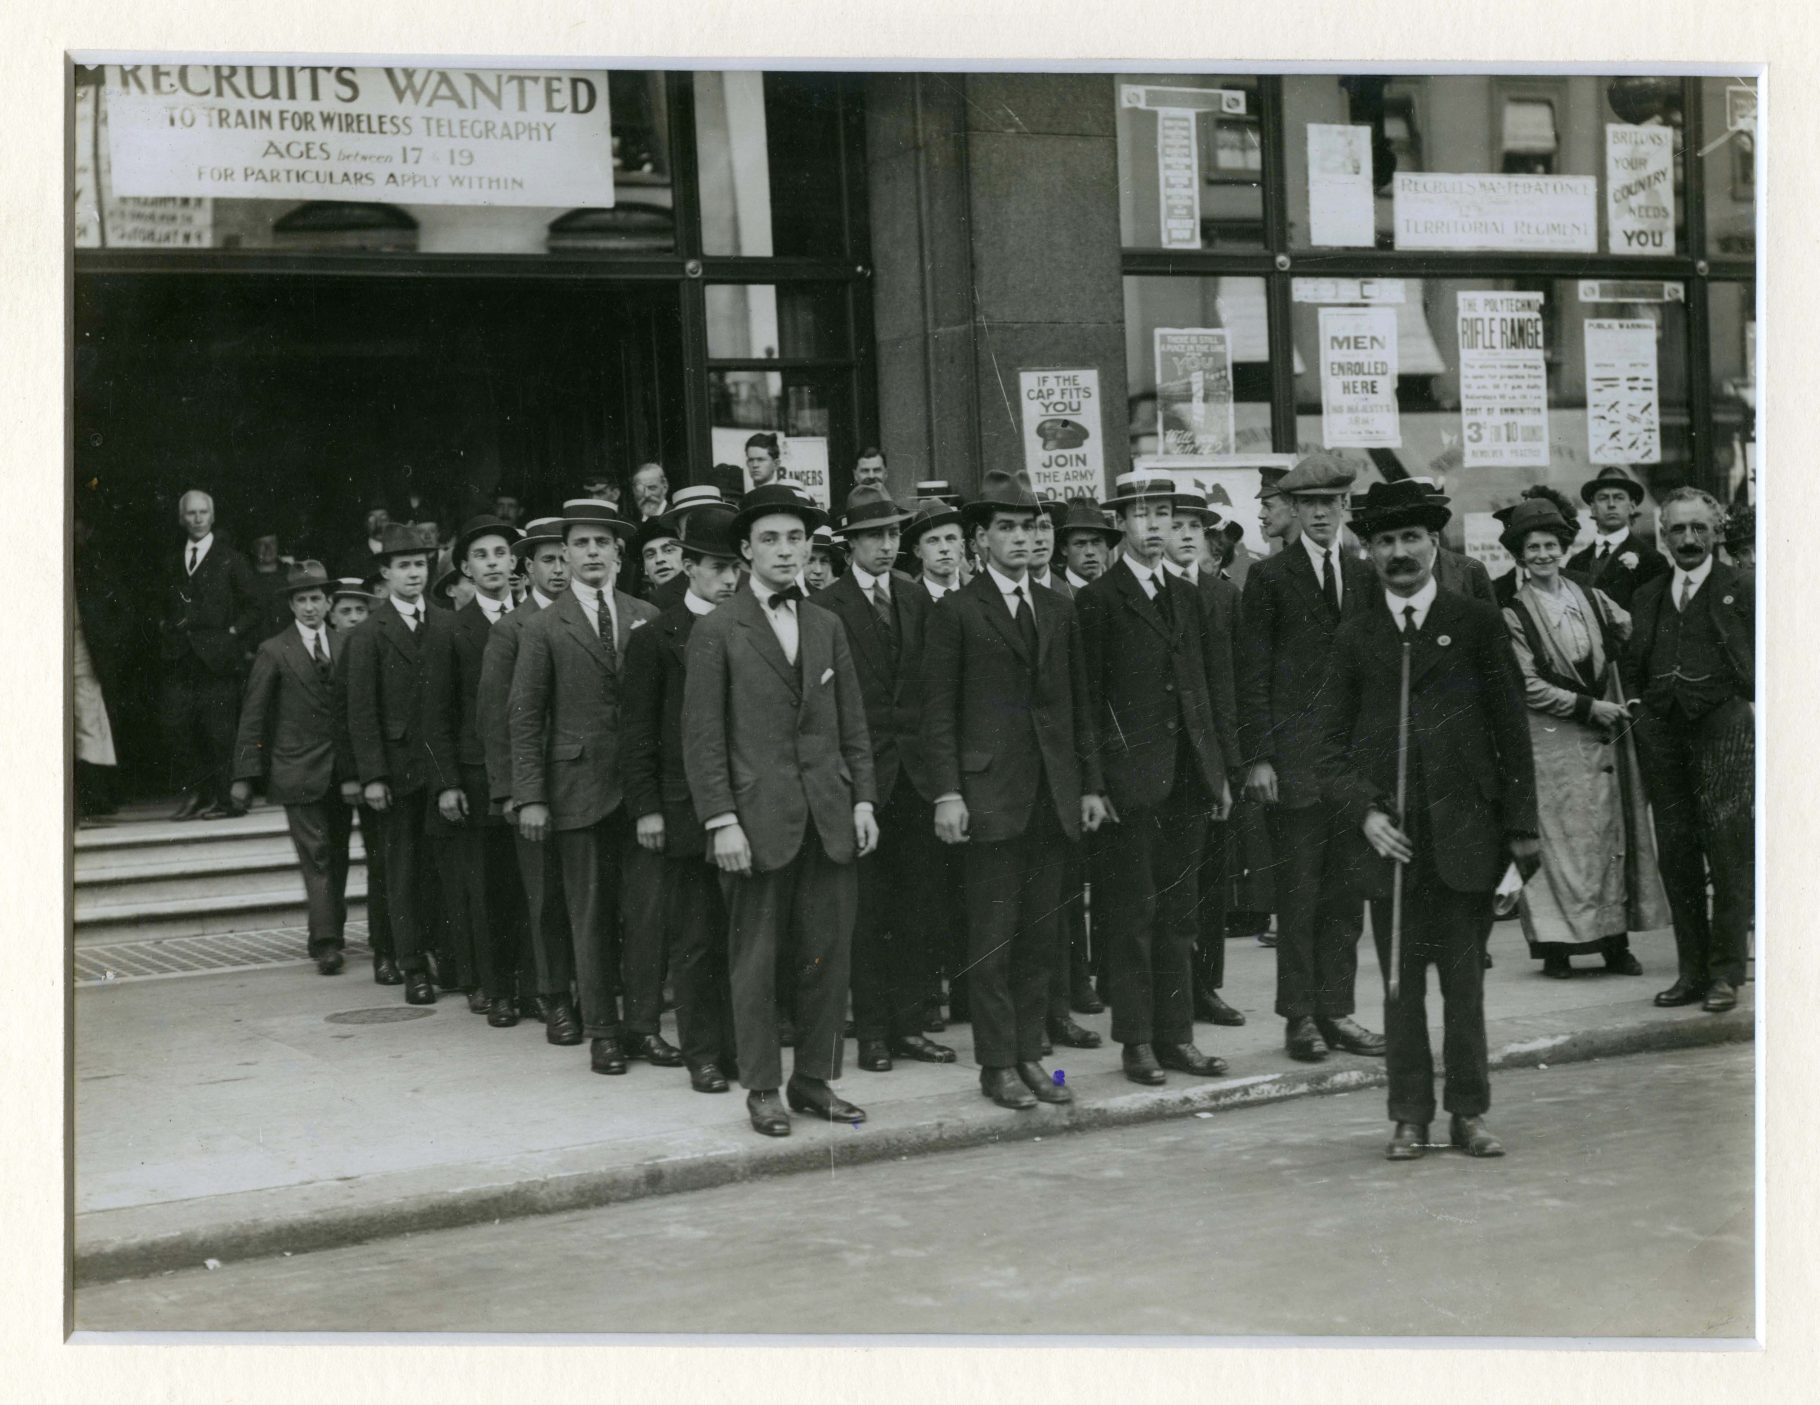 New recruits for wireless telegraphy training outside 309 Regent Street, c1914-15